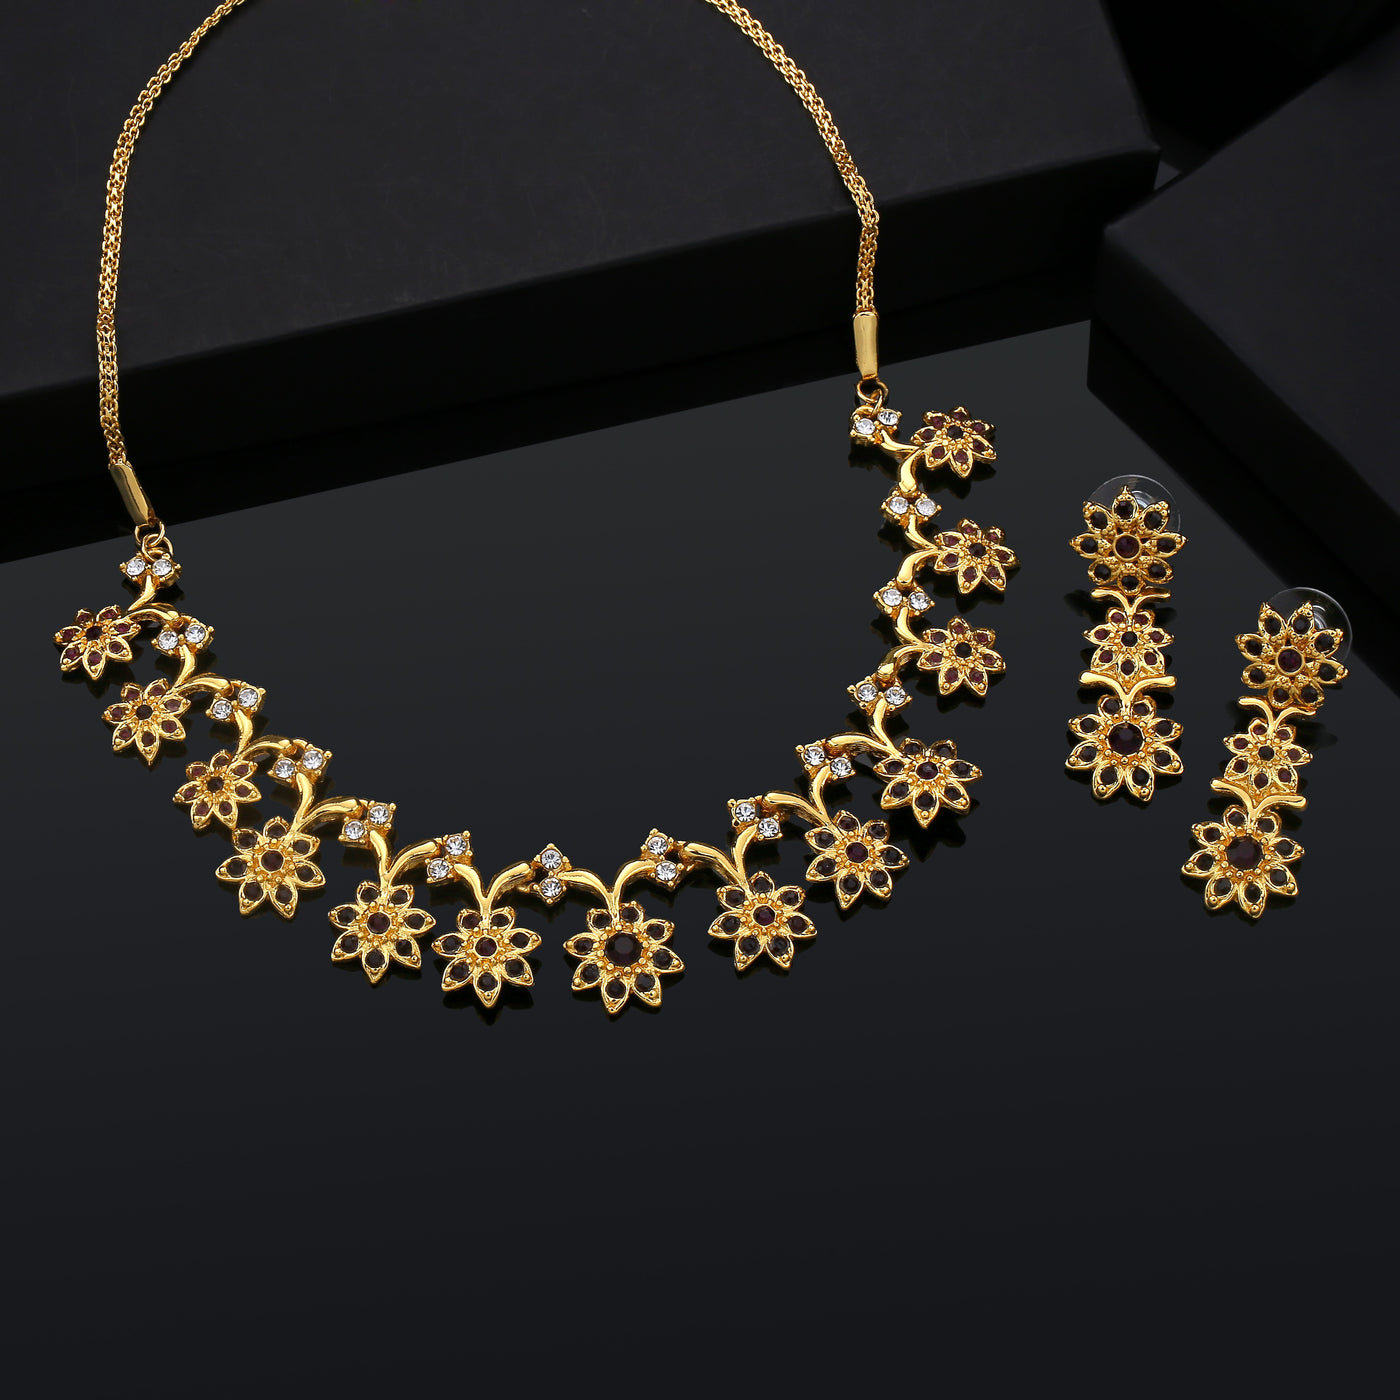 Estele 24 Kt Gold Plated Flower linked with Austrain Crystal Necklace Set for Women